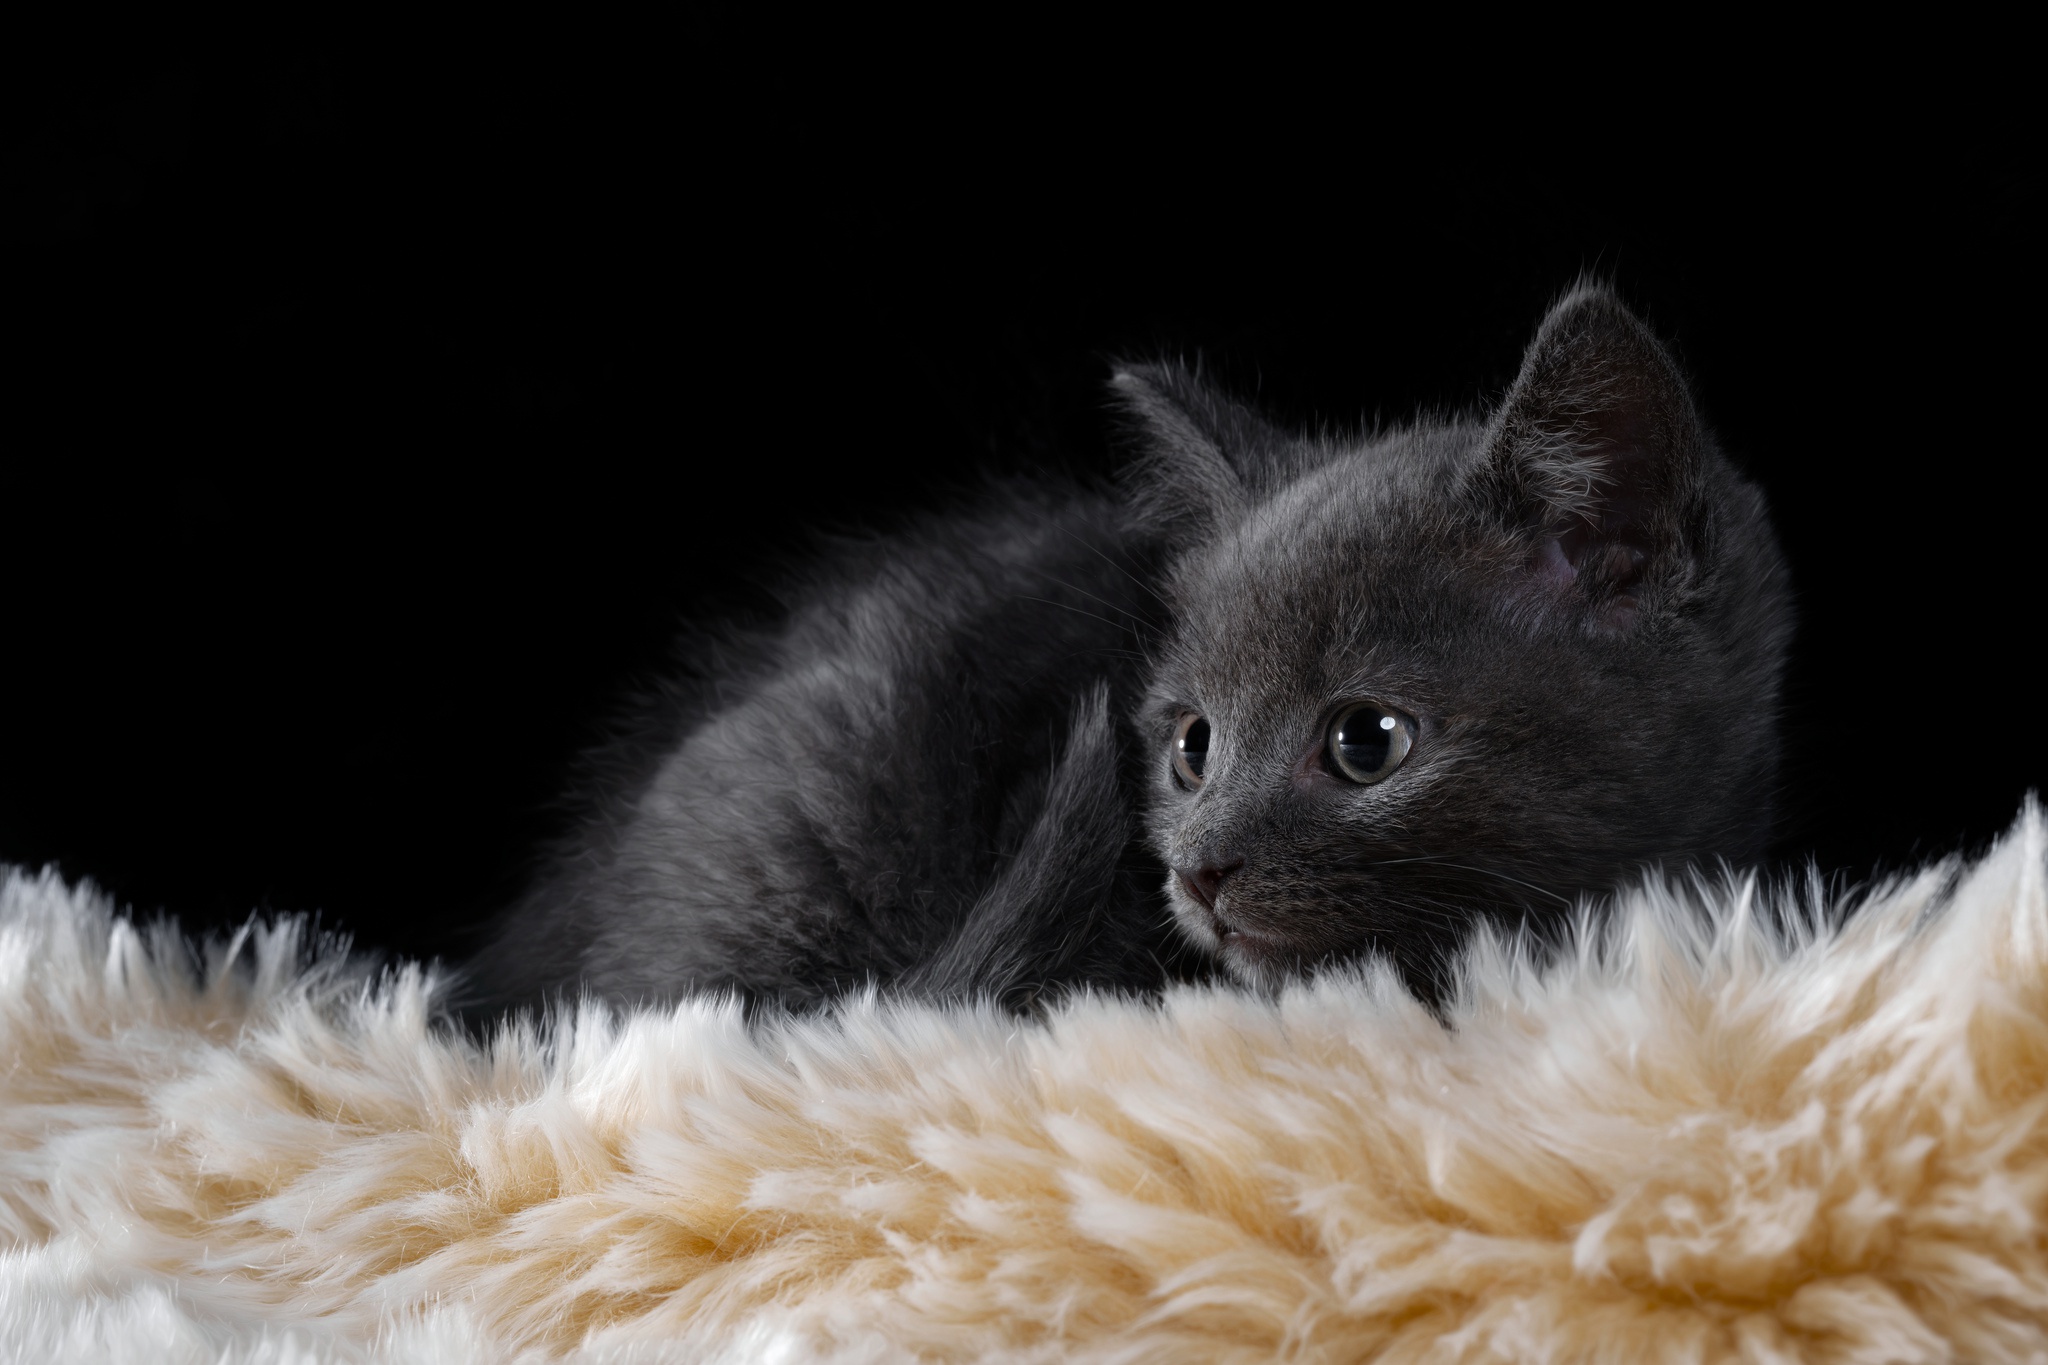 General 2048x1365 cats animals carpet black feline kittens